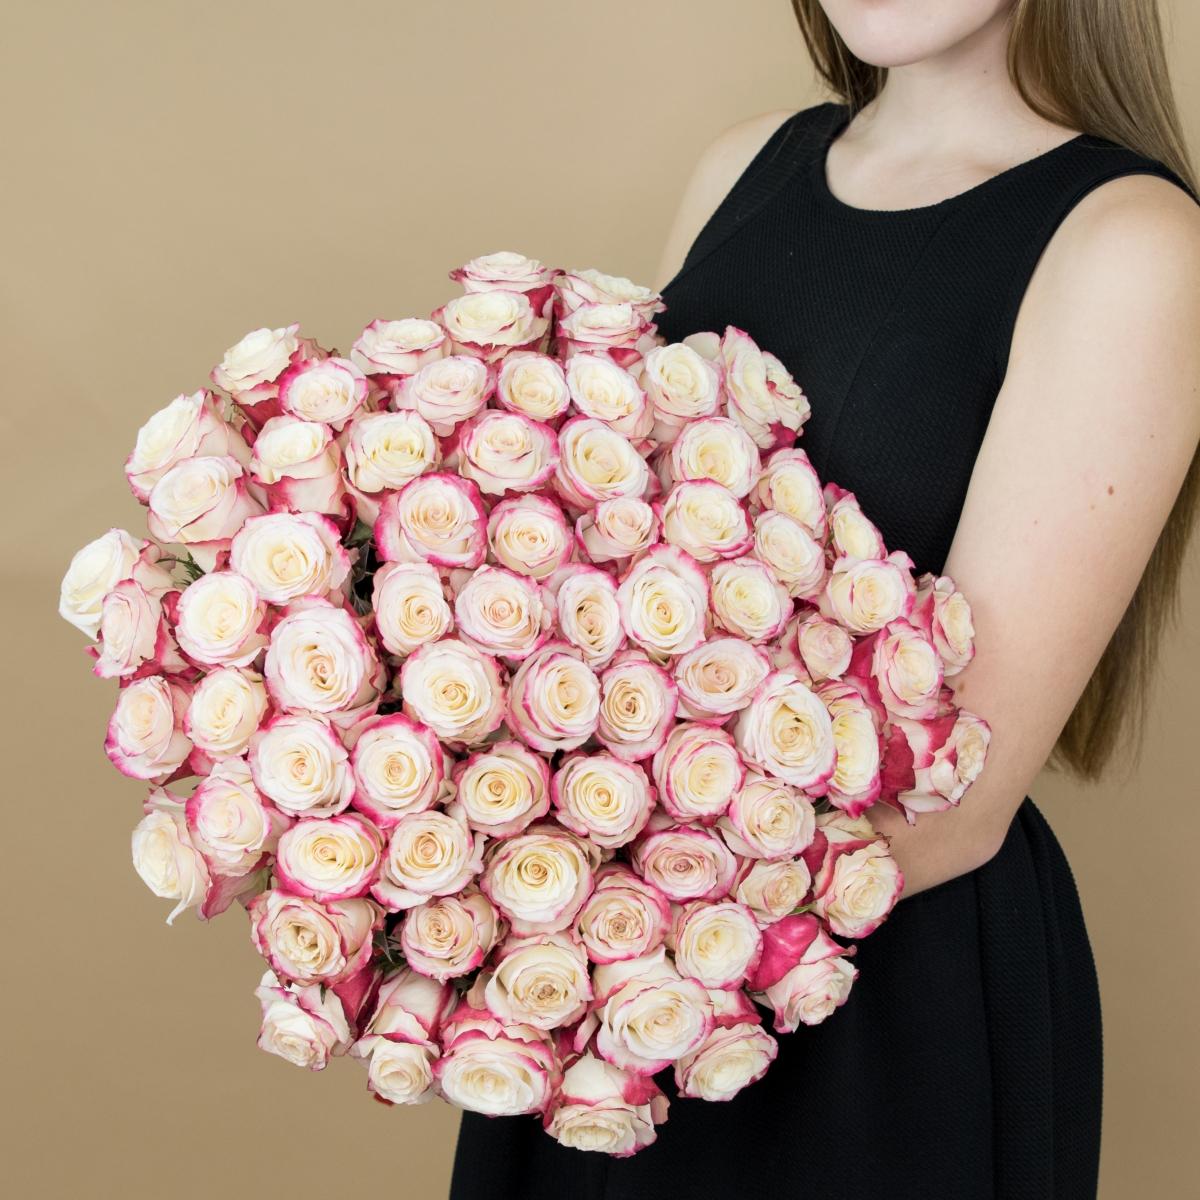 Розы красно-белые 101 шт. (40 см) Артикул: 86508